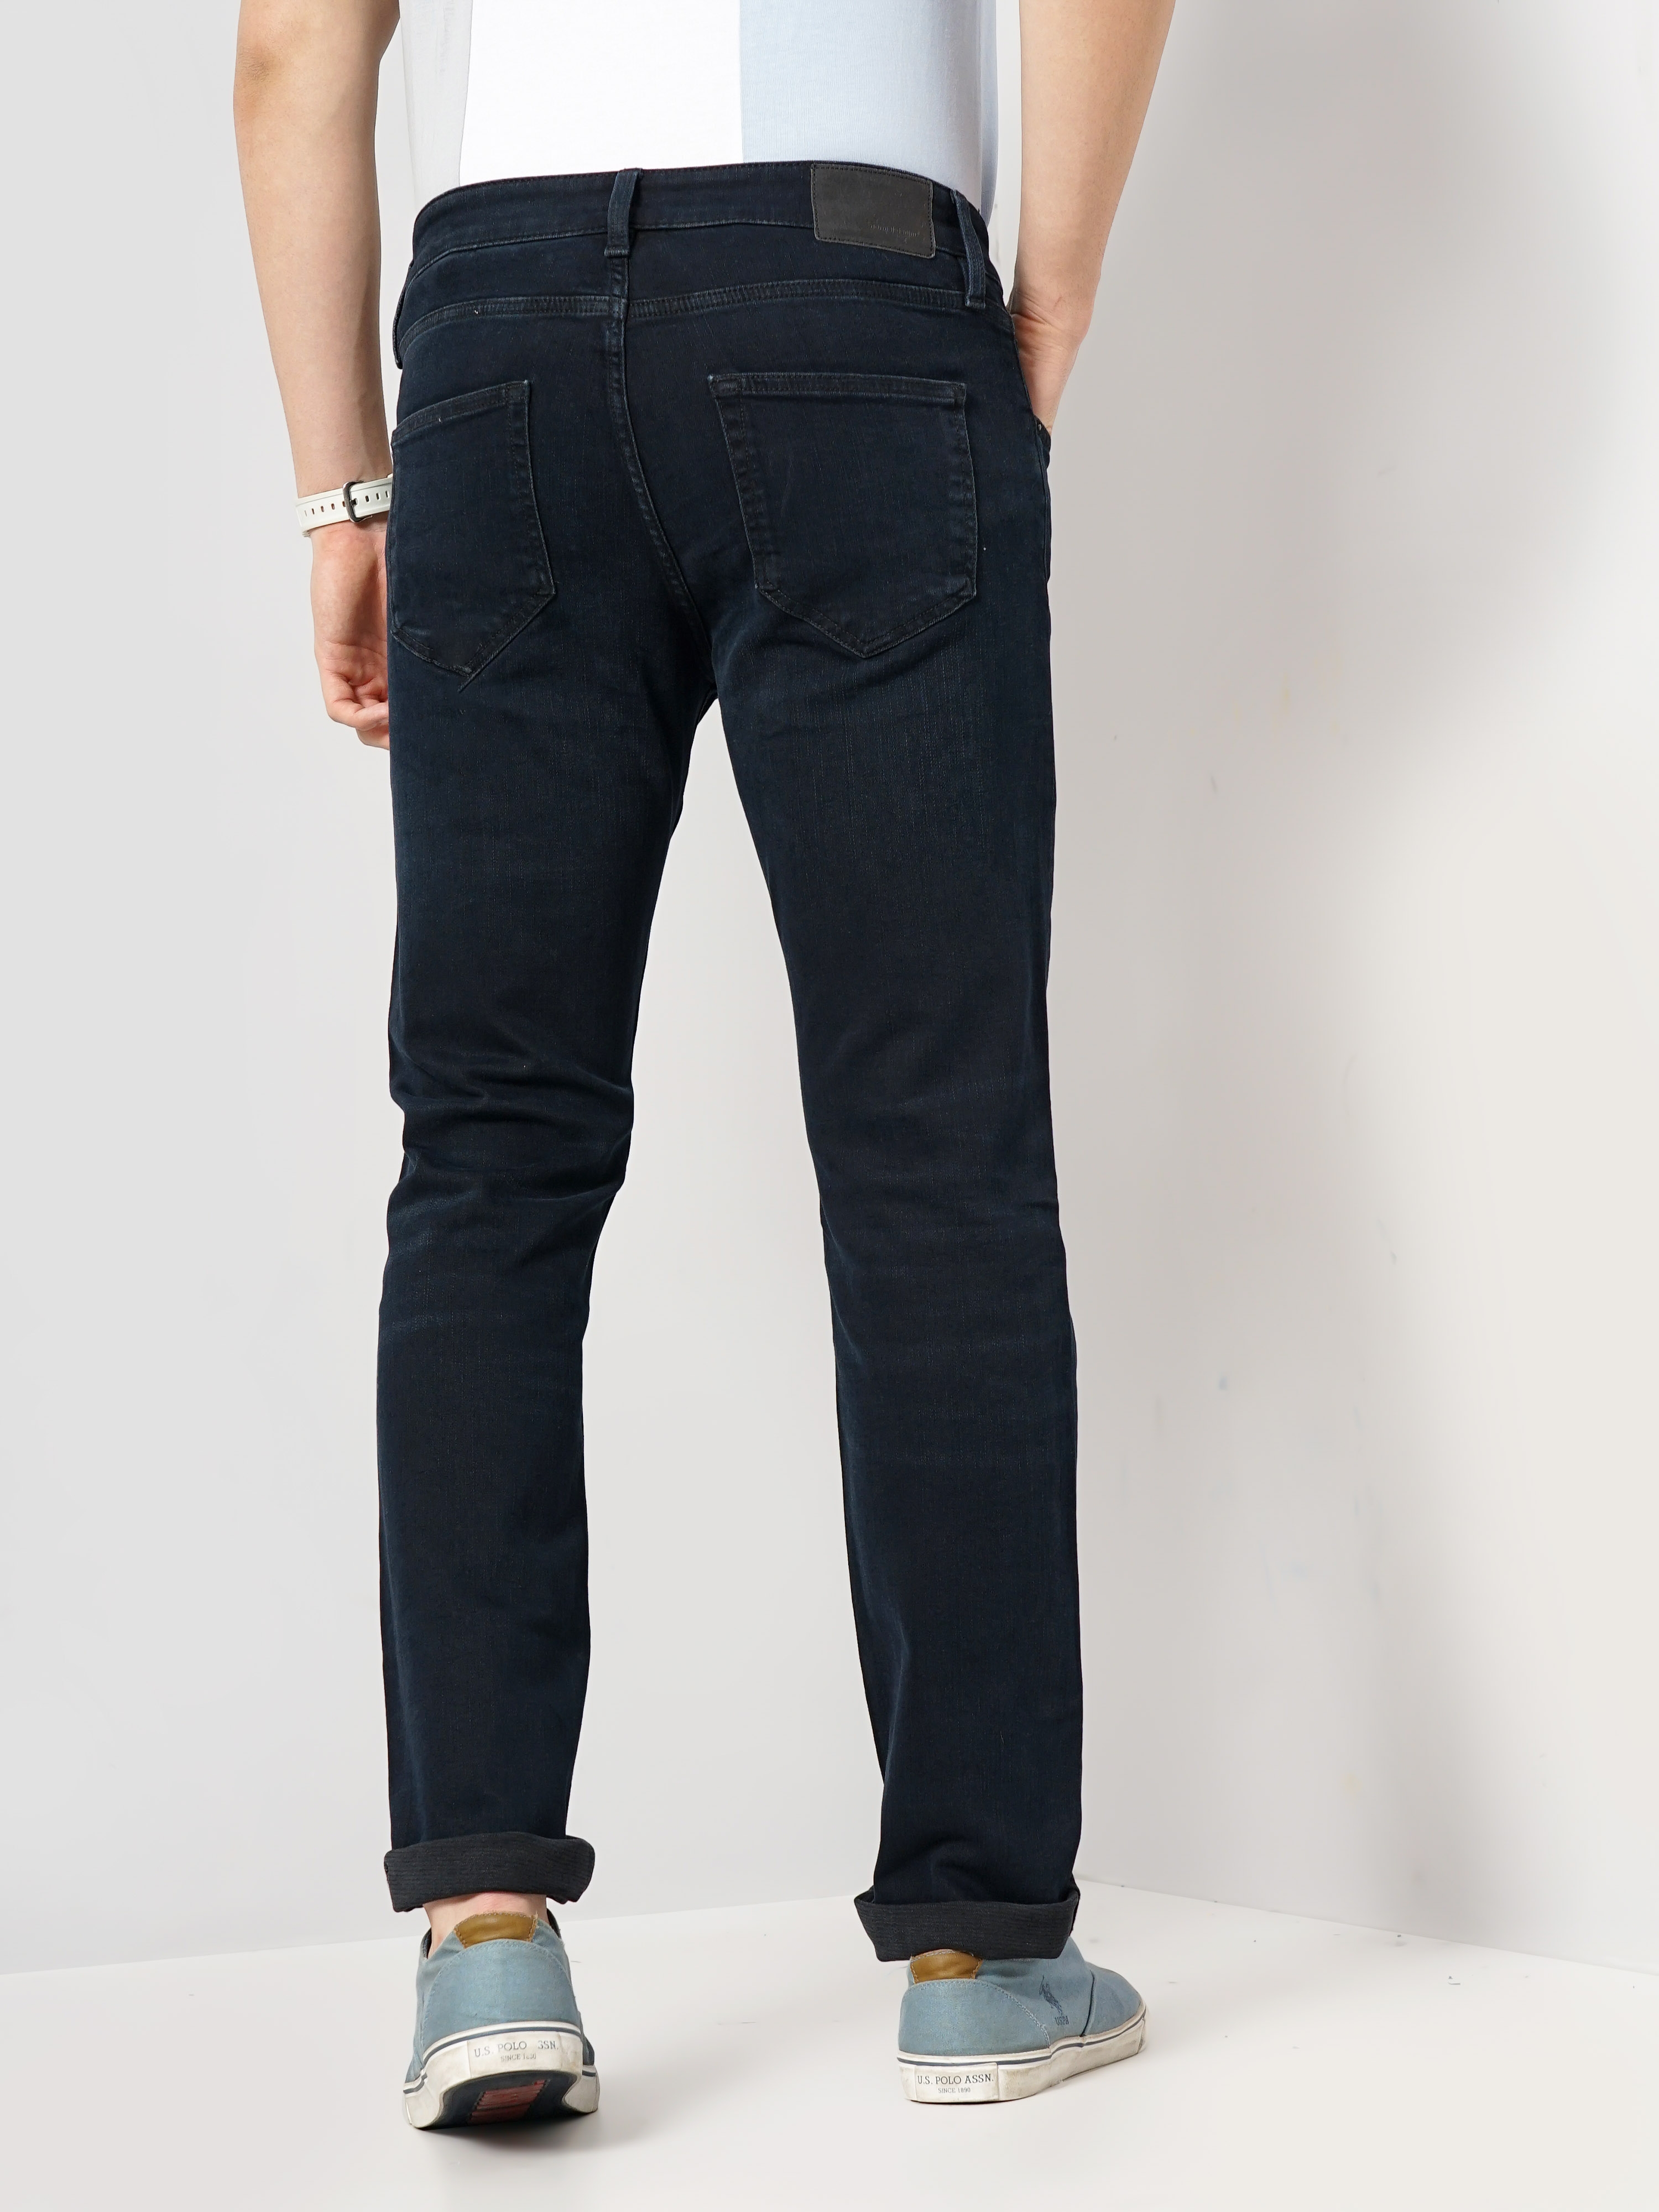 Cotton On Men's Super Skinny Jeans Ripped Denim Pants Distressed Bottoms 30  New | eBay